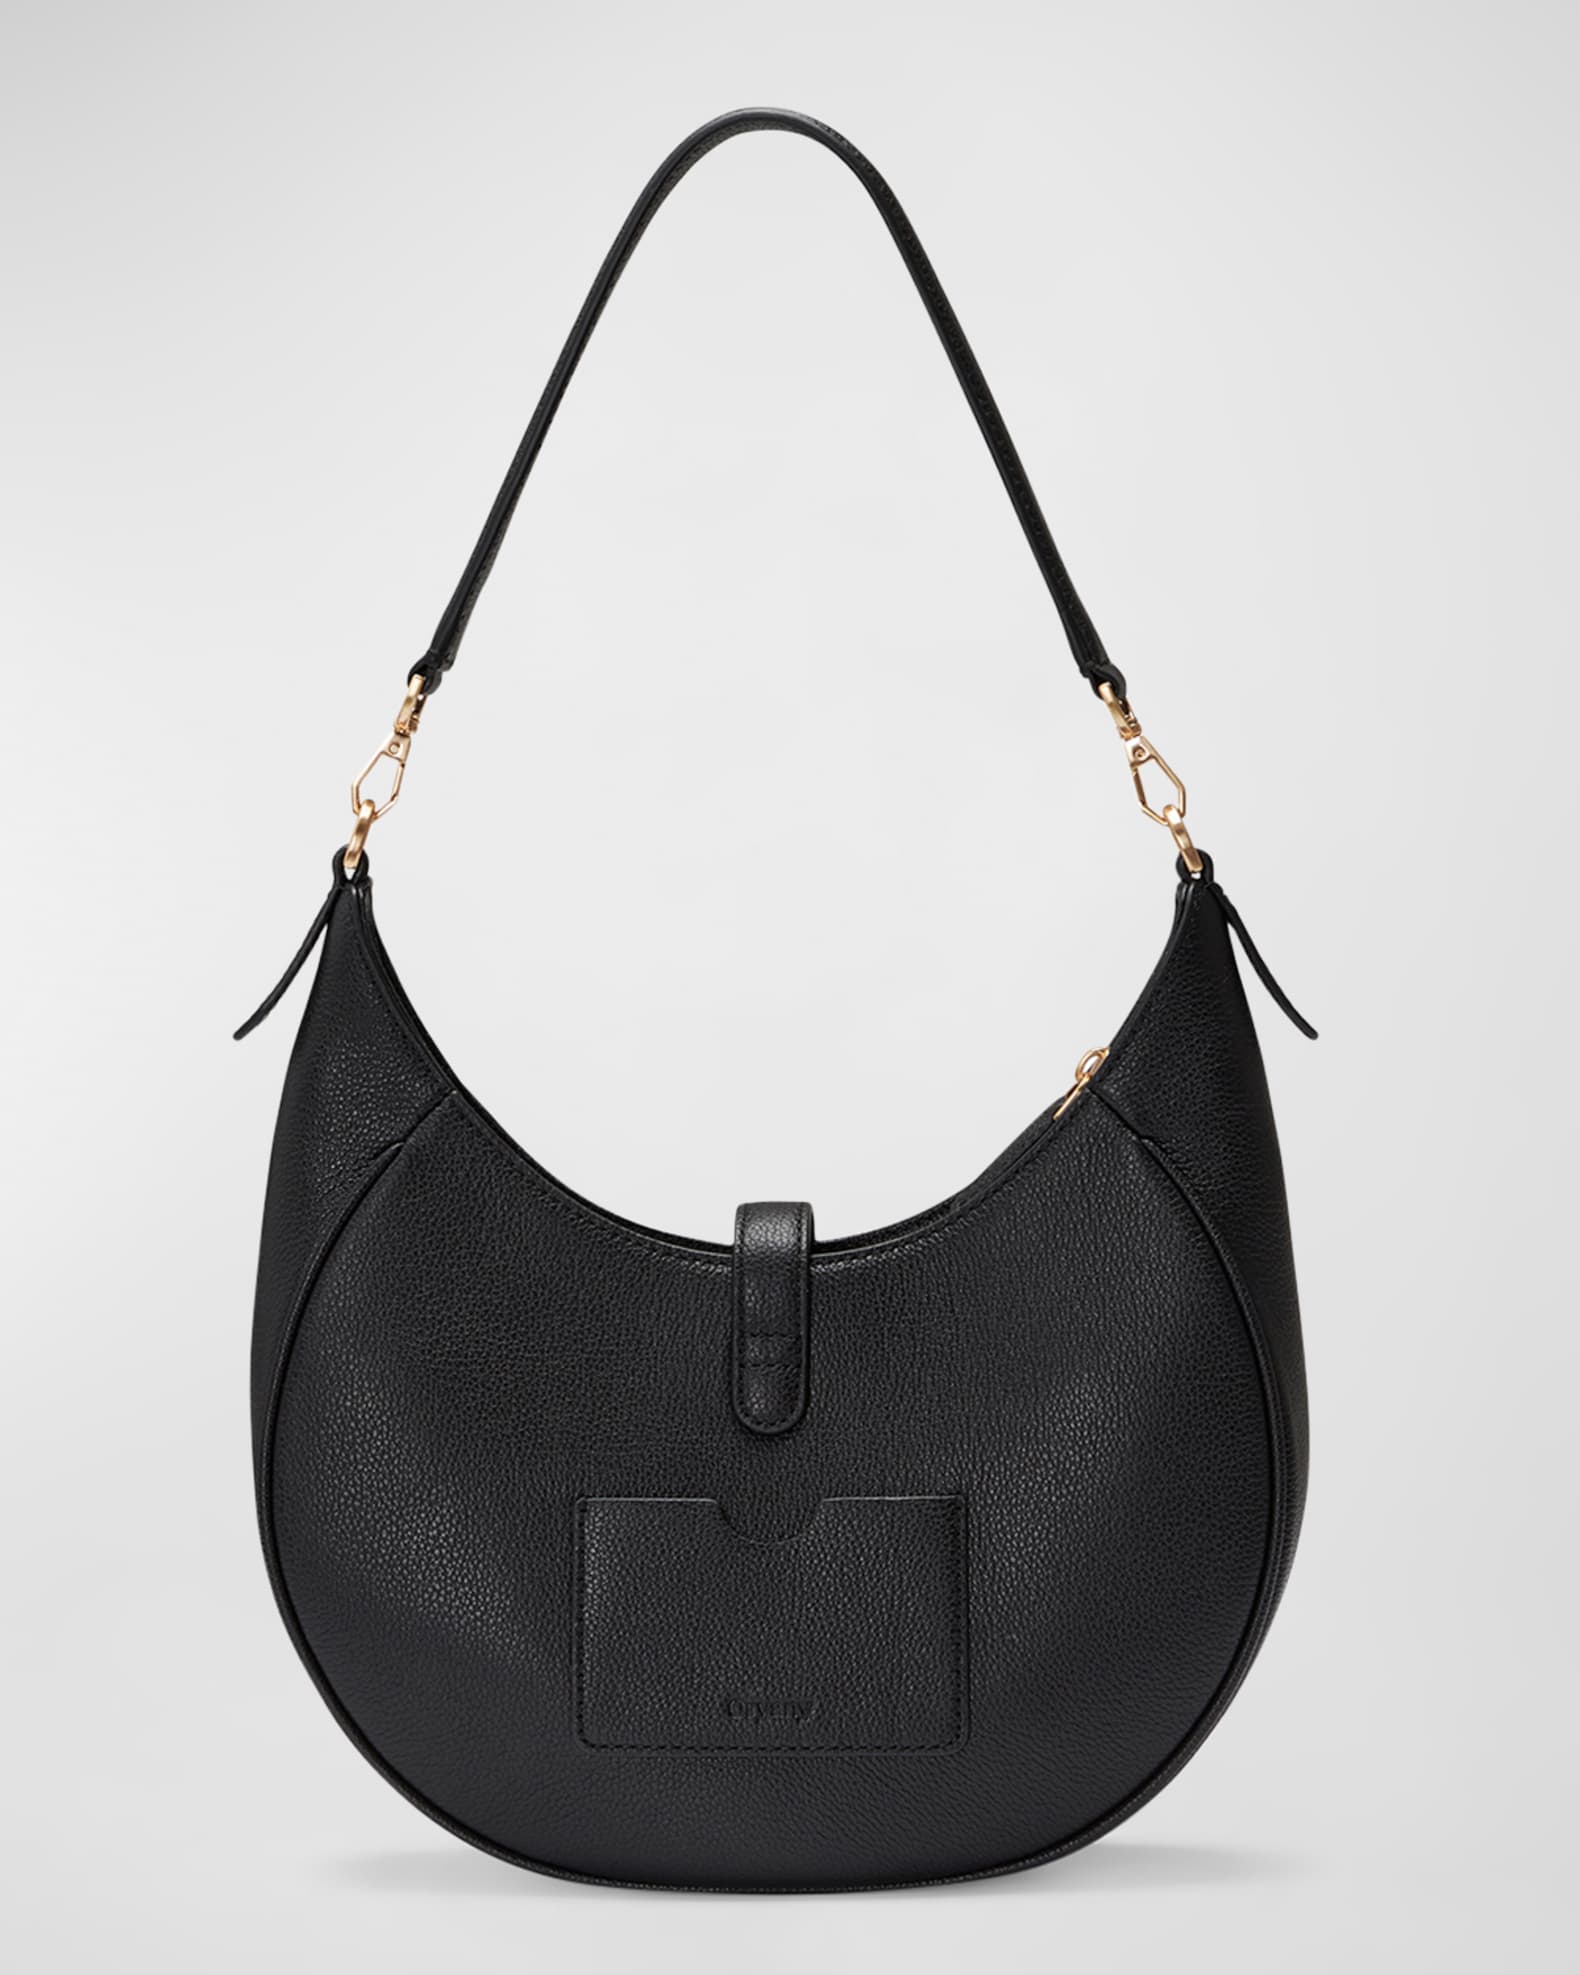 Tory Burch Blue Leather Amanda Handbag/Shoulder Bag.$495